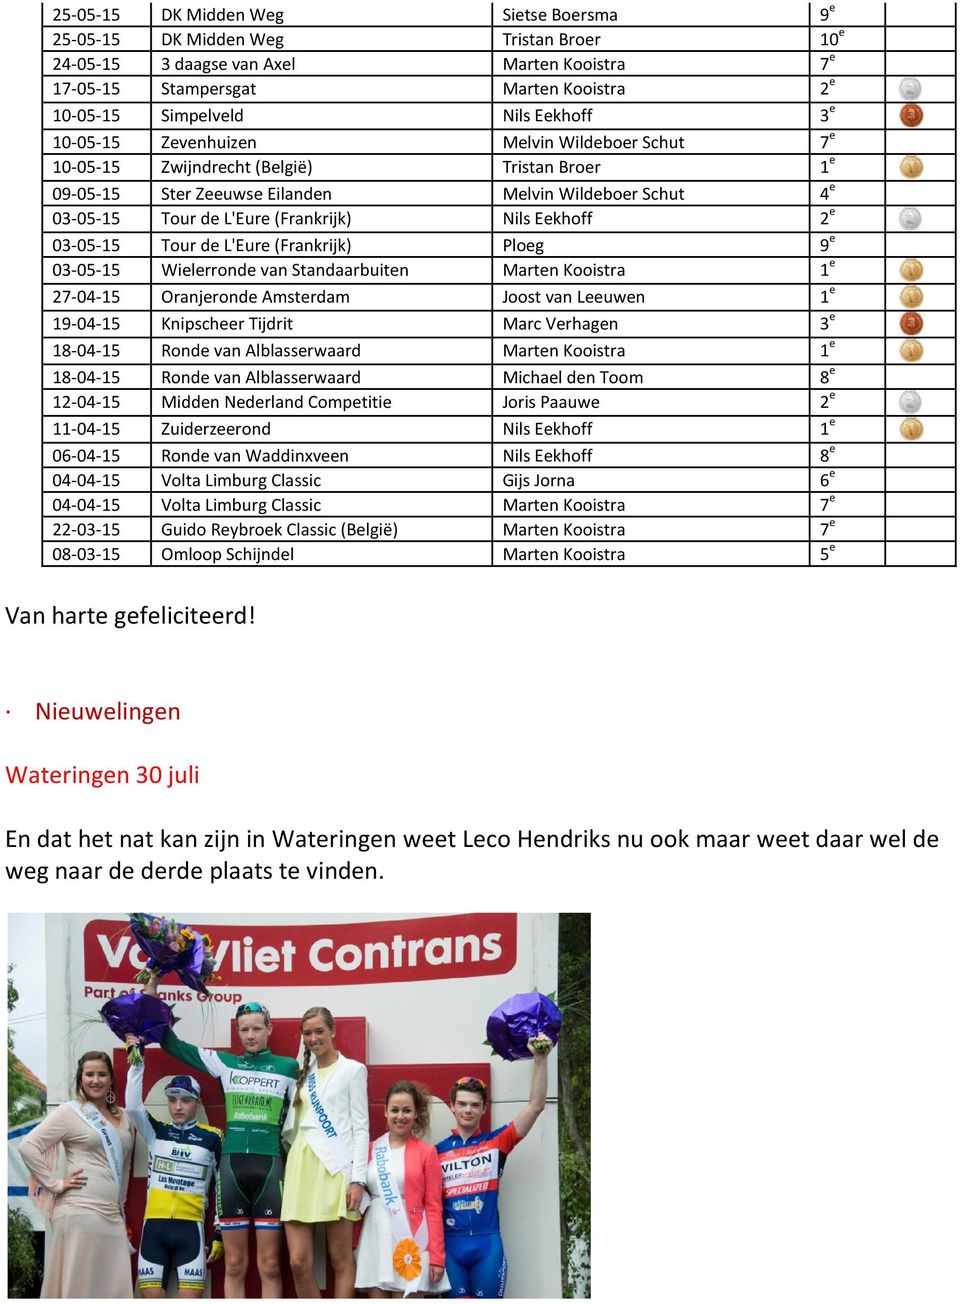 (Frankrijk) Nils Eekhoff 2 e 03-05-15 Tour de L'Eure (Frankrijk) Ploeg 9 e 03-05-15 Wielerronde van Standaarbuiten Marten Kooistra 1 e 27-04-15 Oranjeronde Amsterdam Joost van Leeuwen 1 e 19-04-15